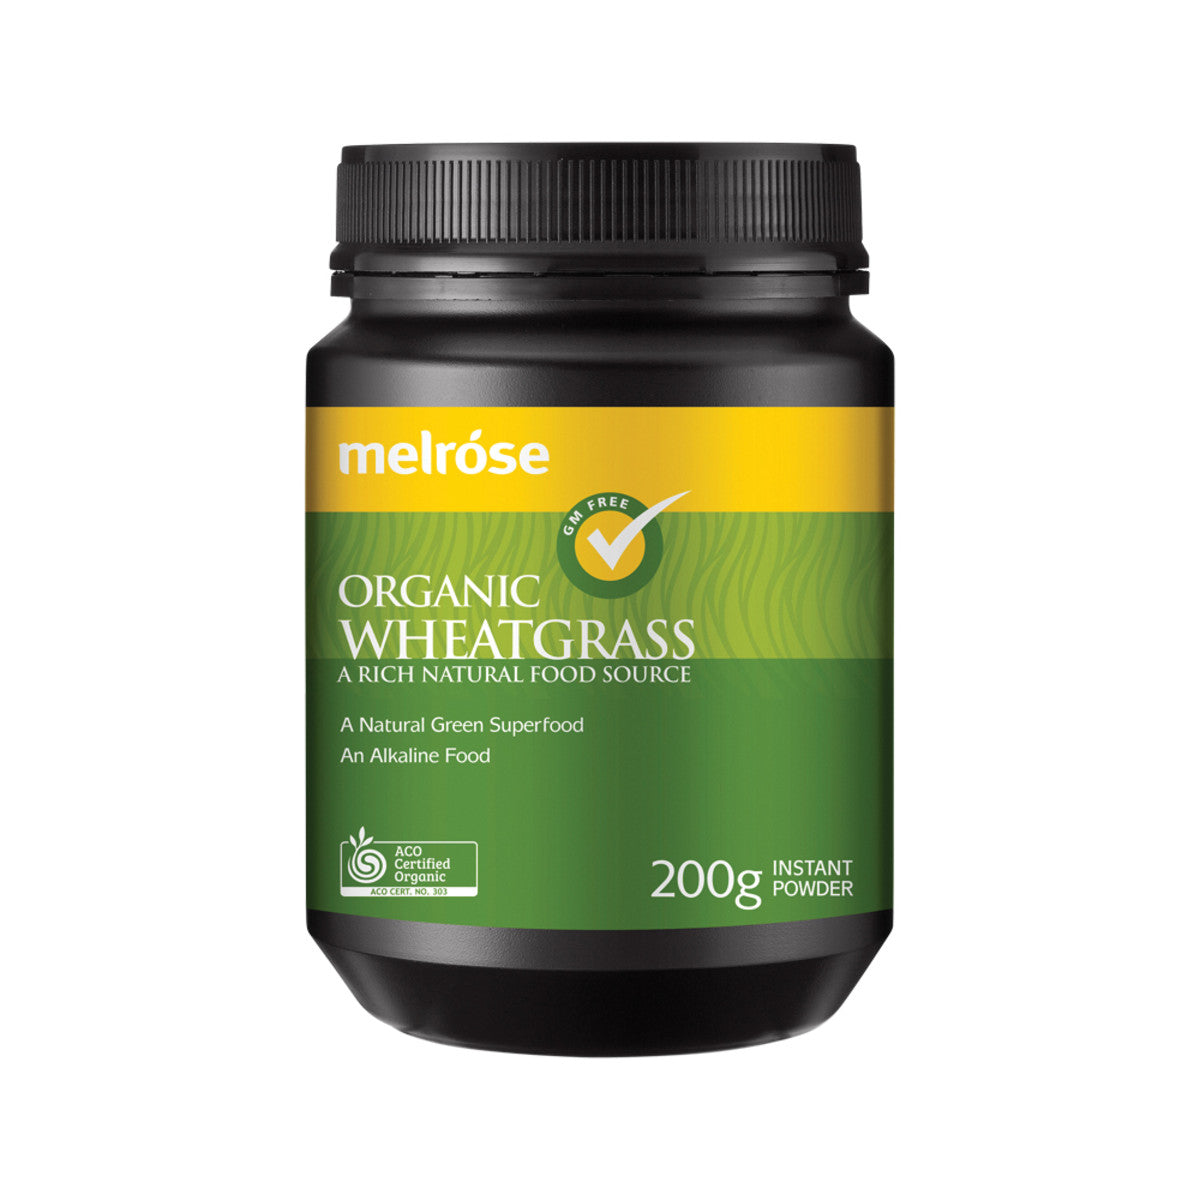 Melrose - Organic Wheatgrass Powder